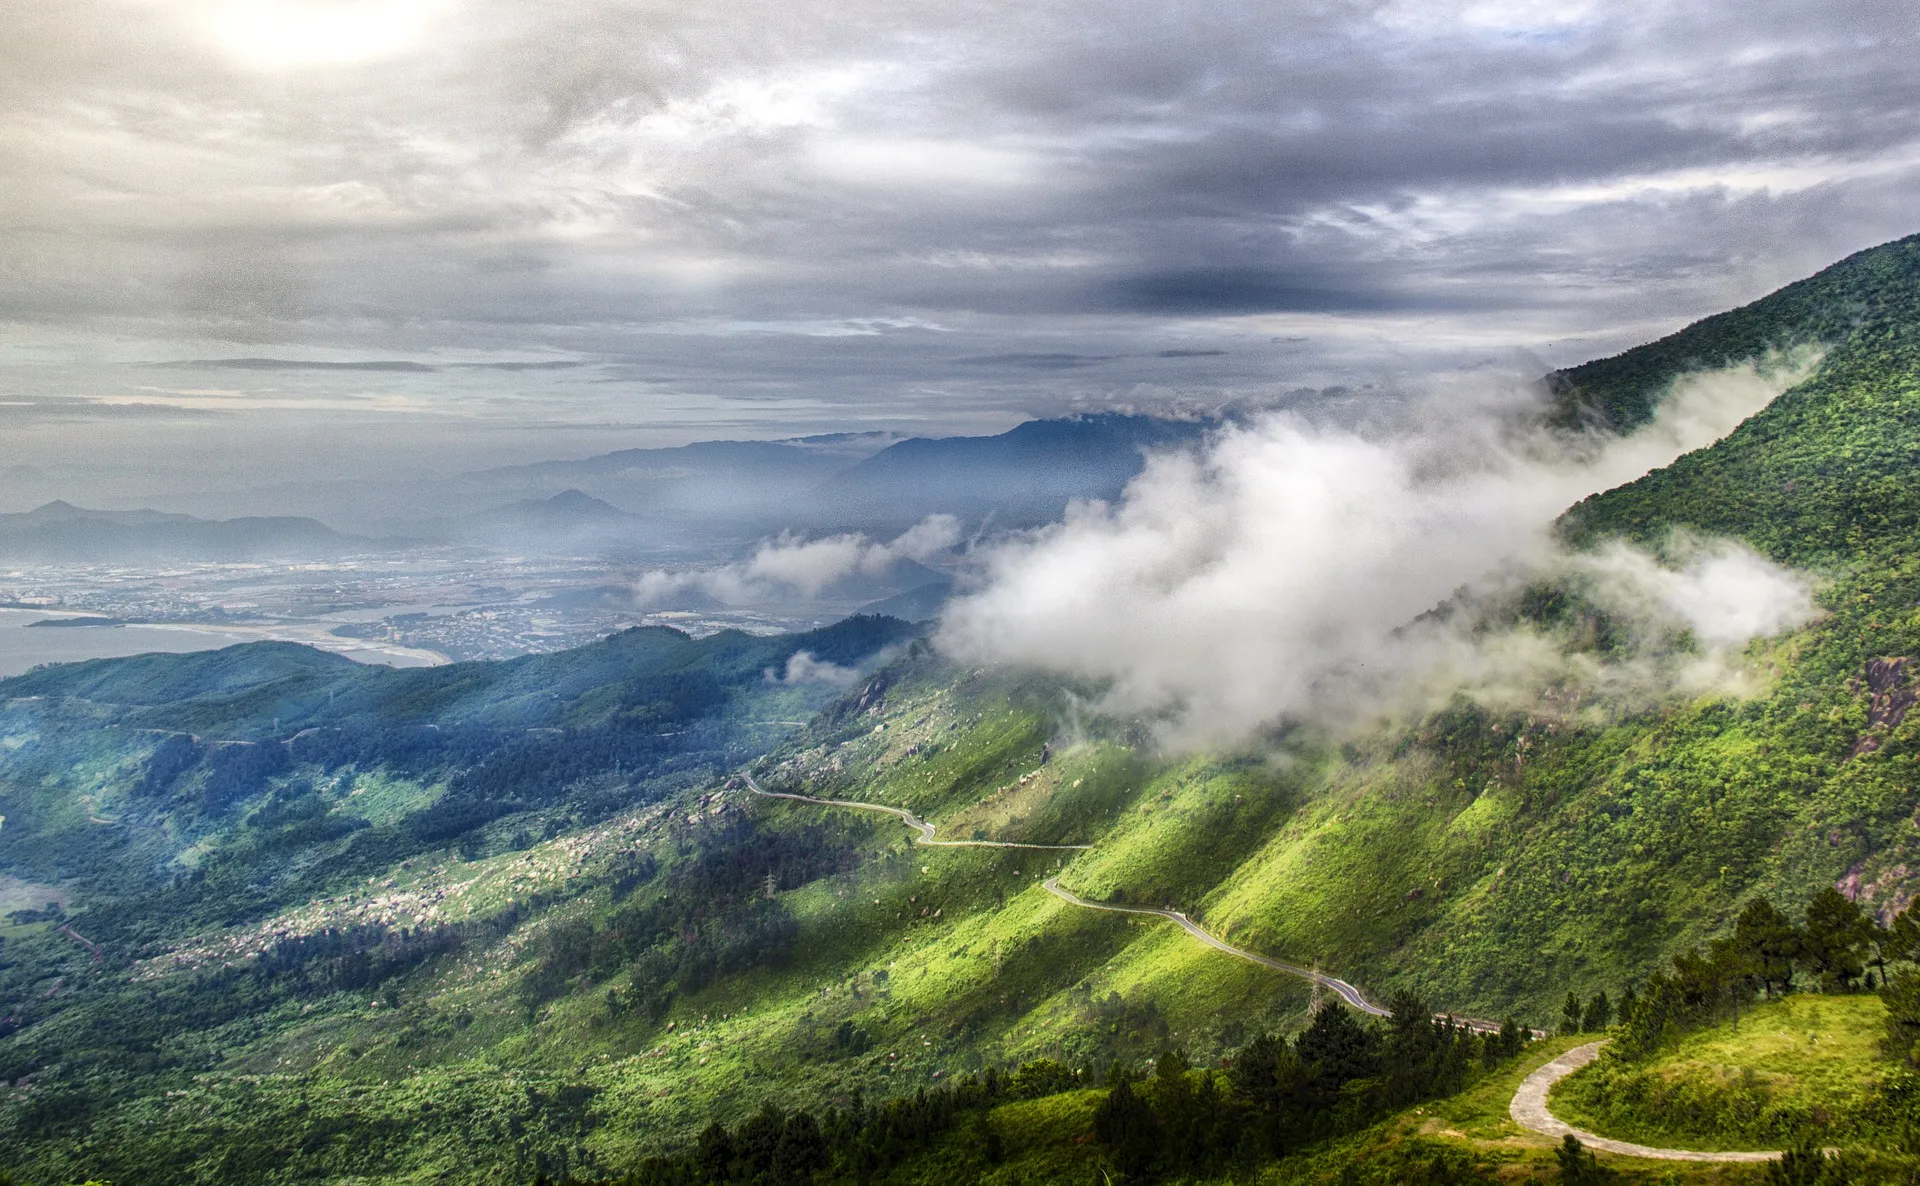 Misty rolling hills of Hai Van Pass